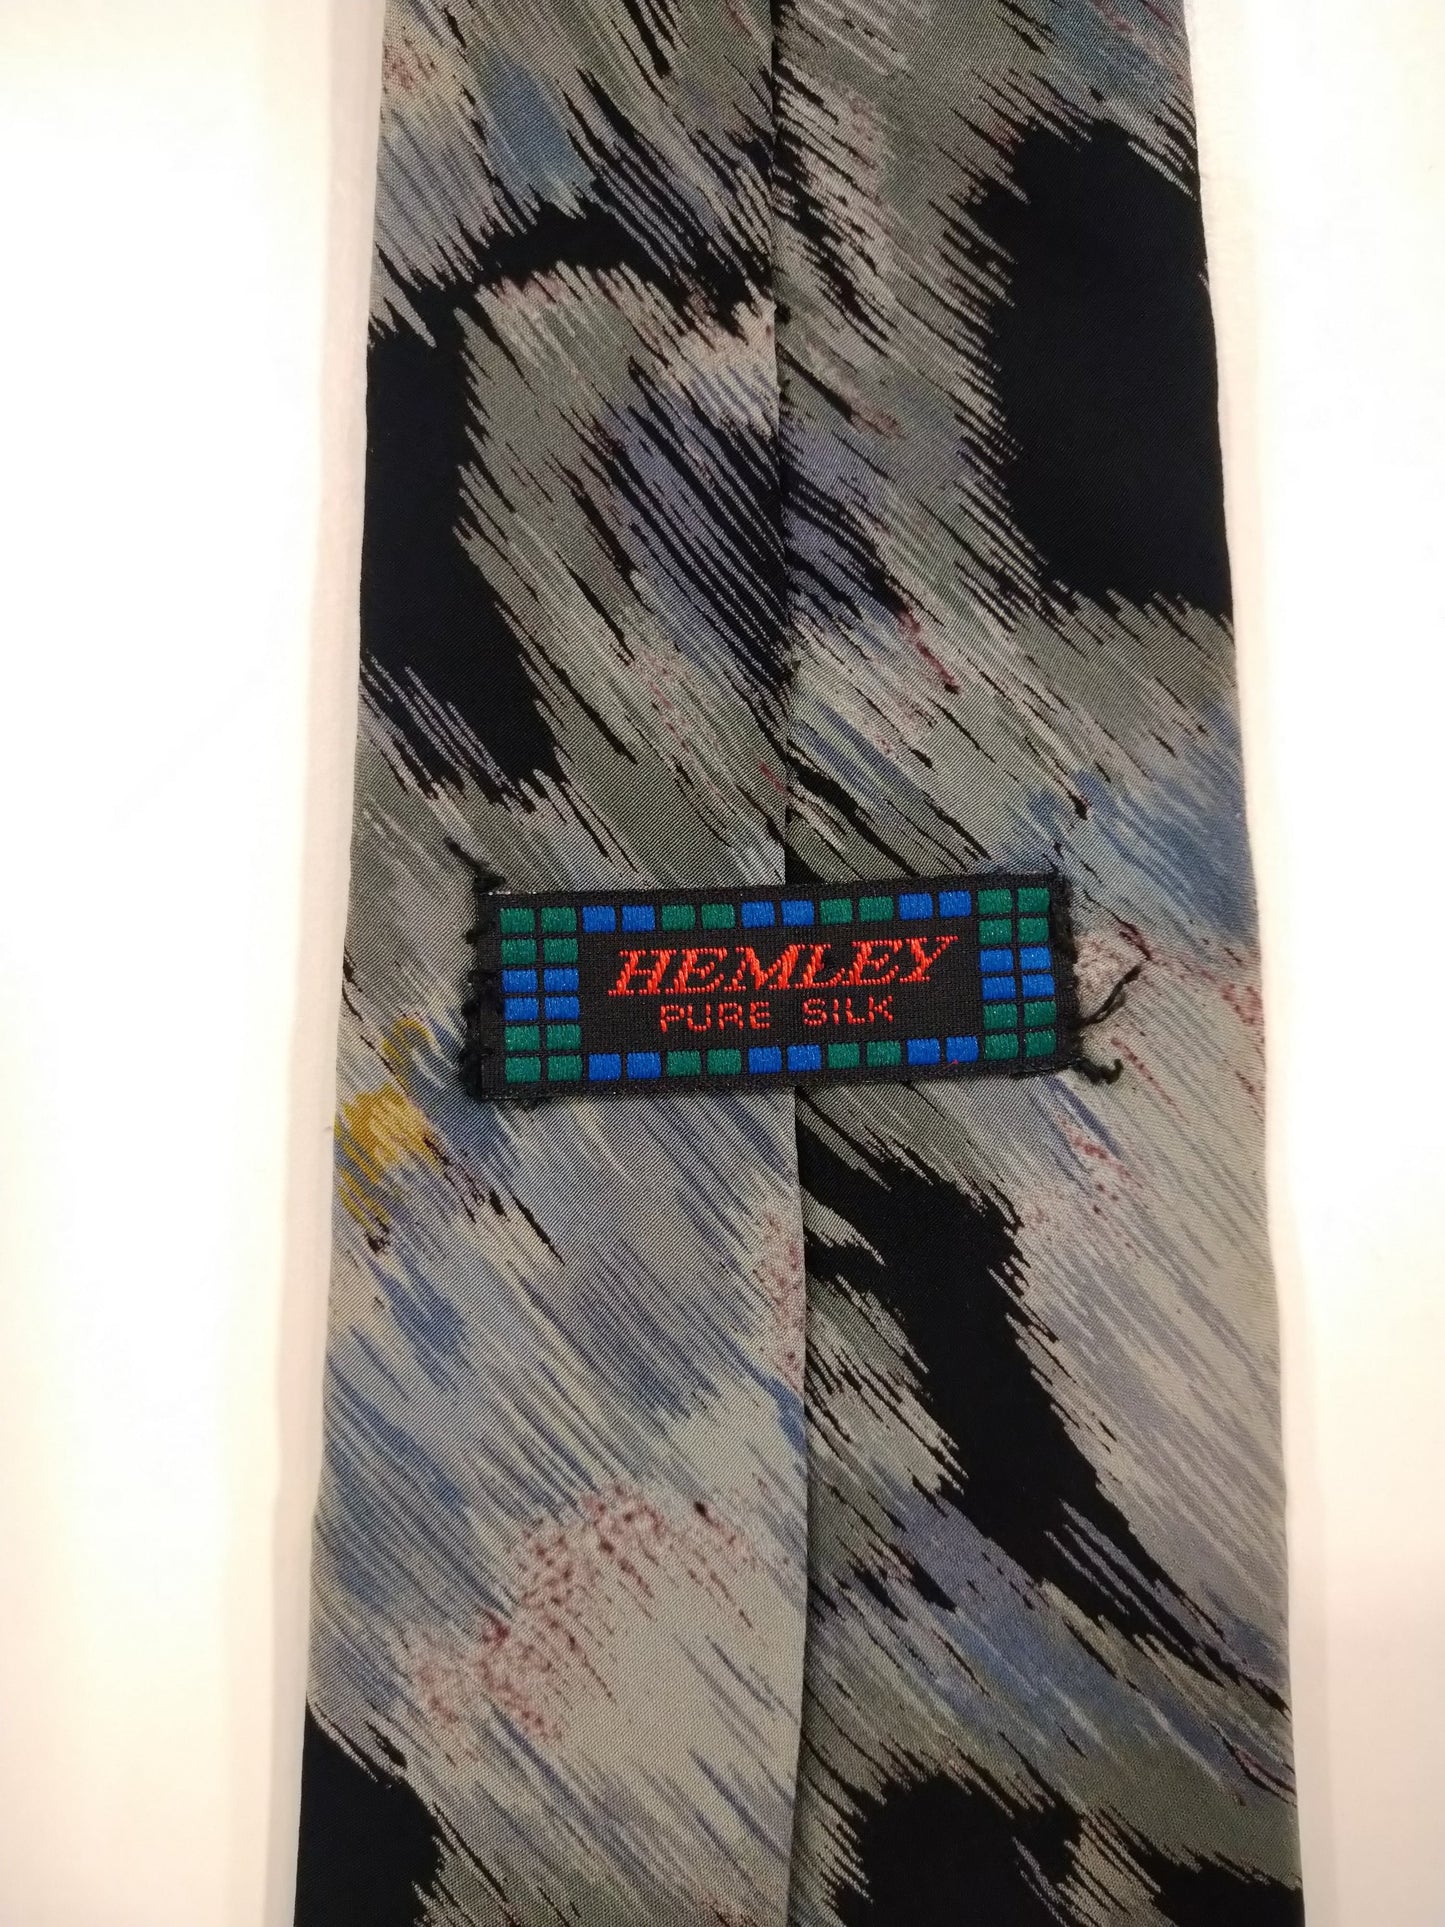 La corbata lateral de Hemley. Buen motivo.